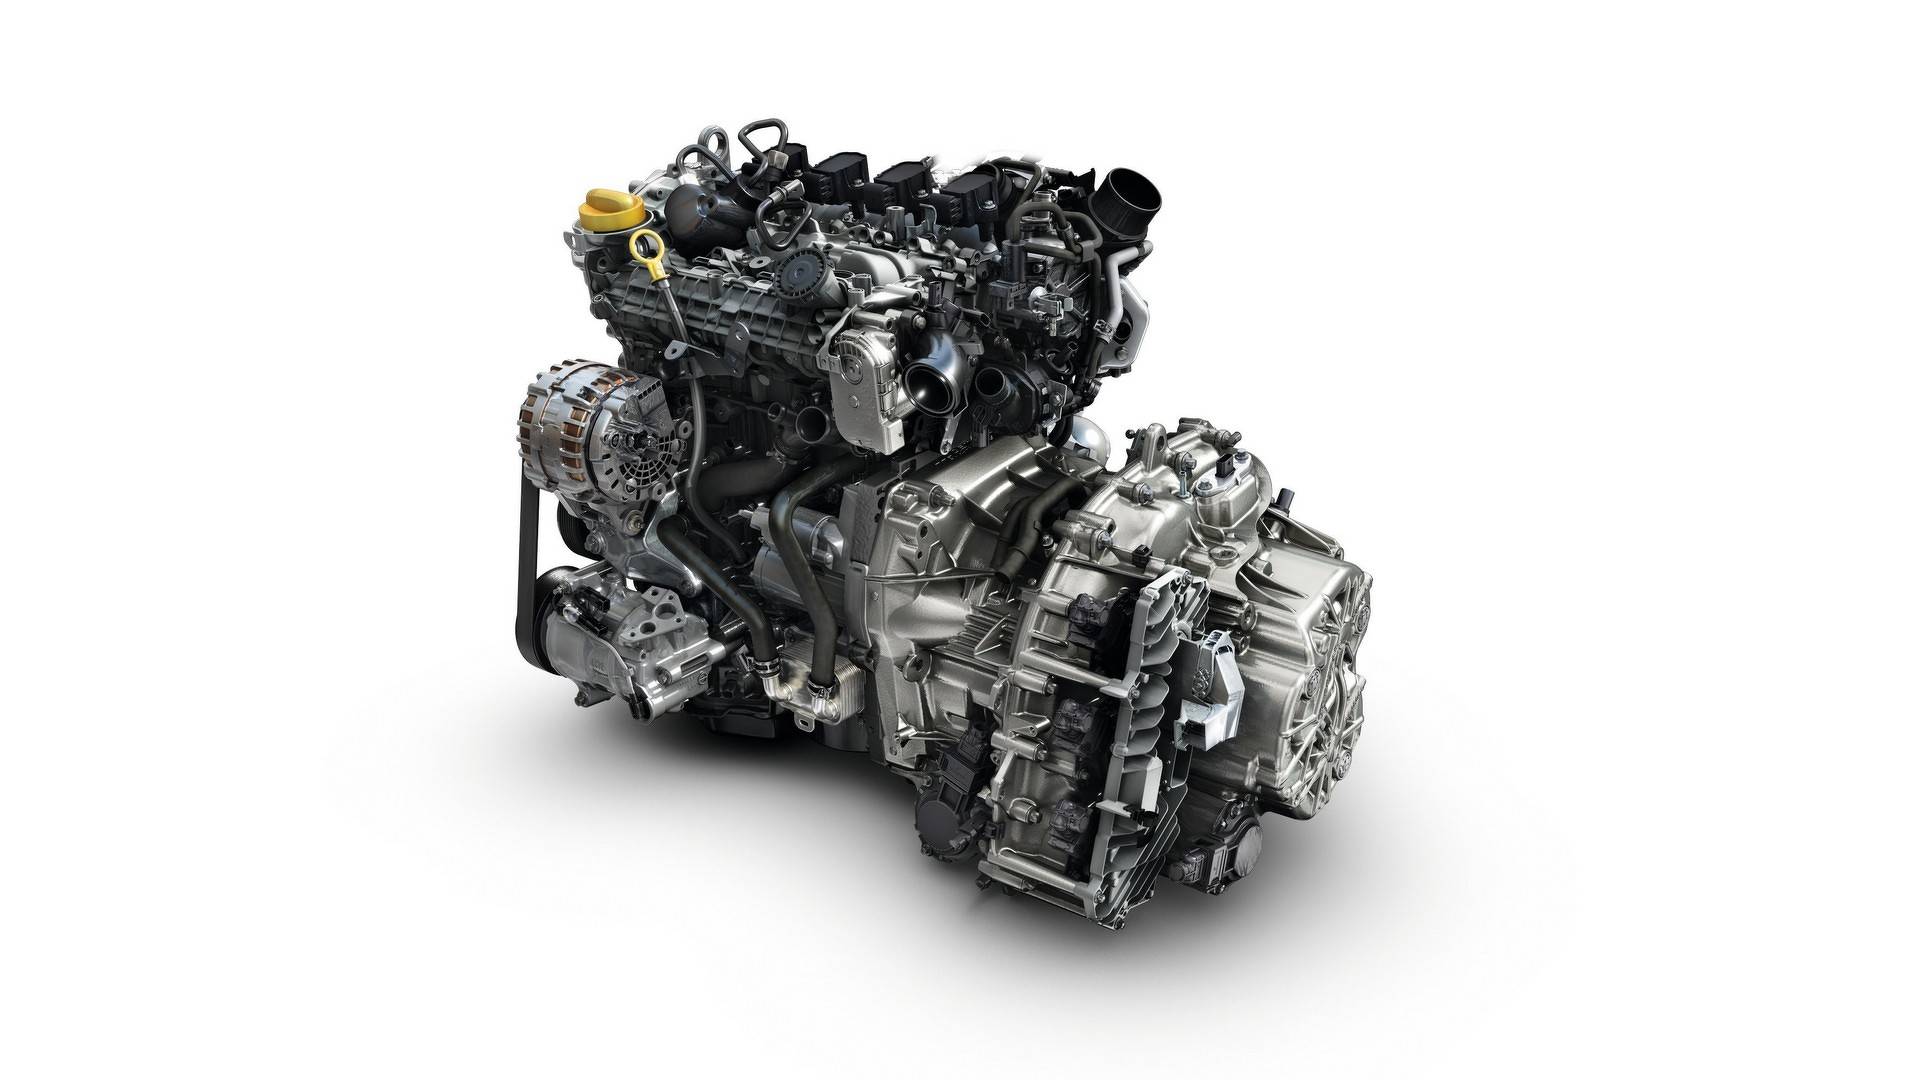 Nέος turbo κινητήρας βενζίνης 1,3 λίτρων από τις Renault-Nissan και Daimler